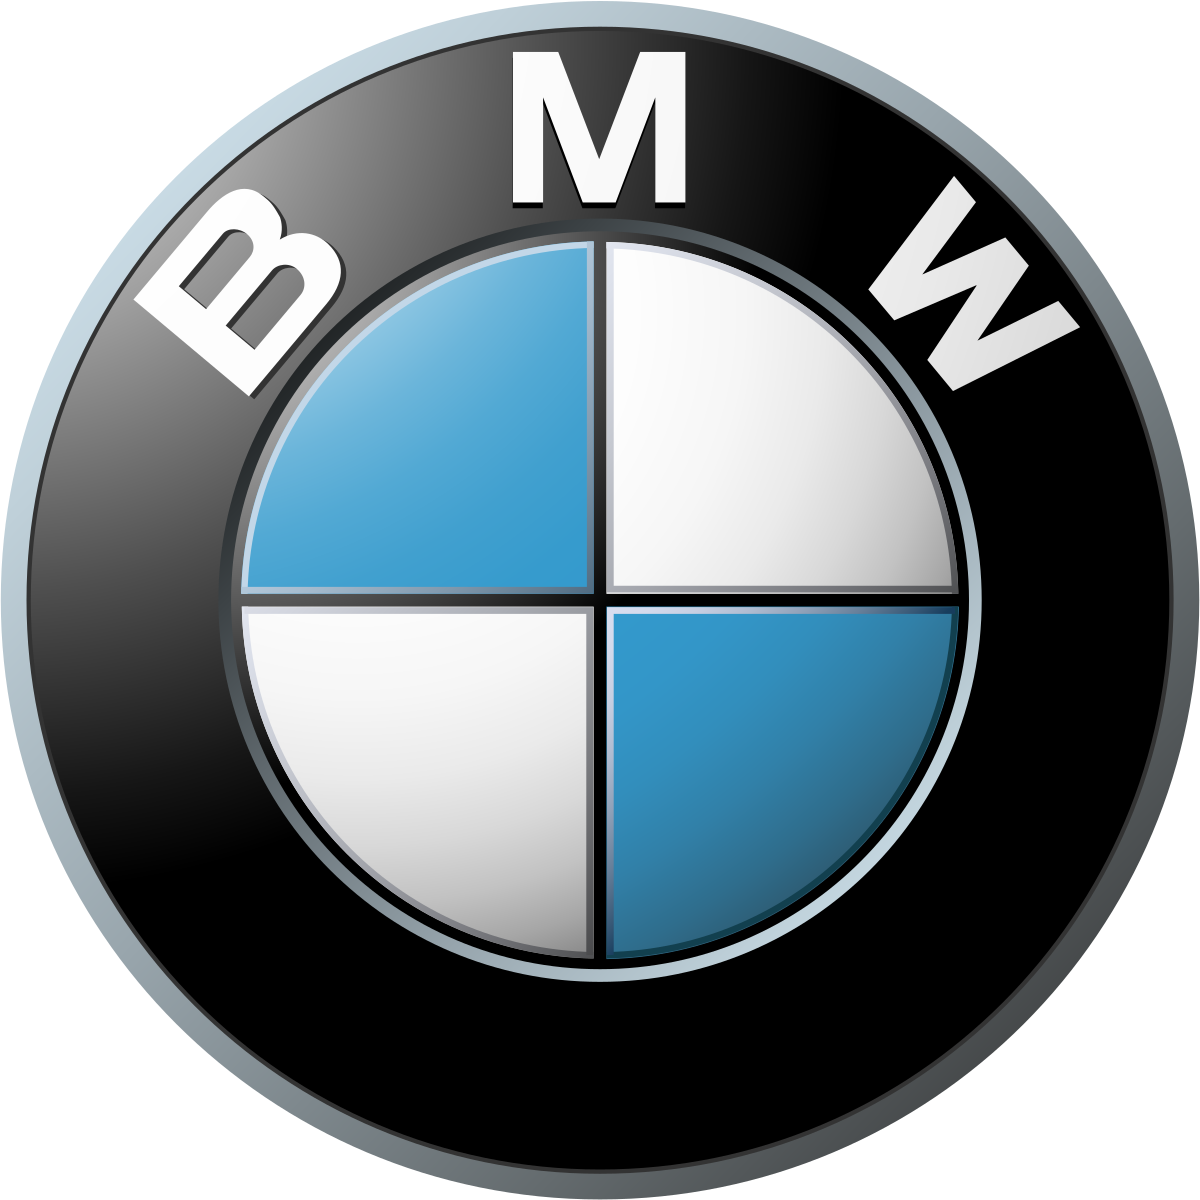 BMW in Formula One - Wikipedia